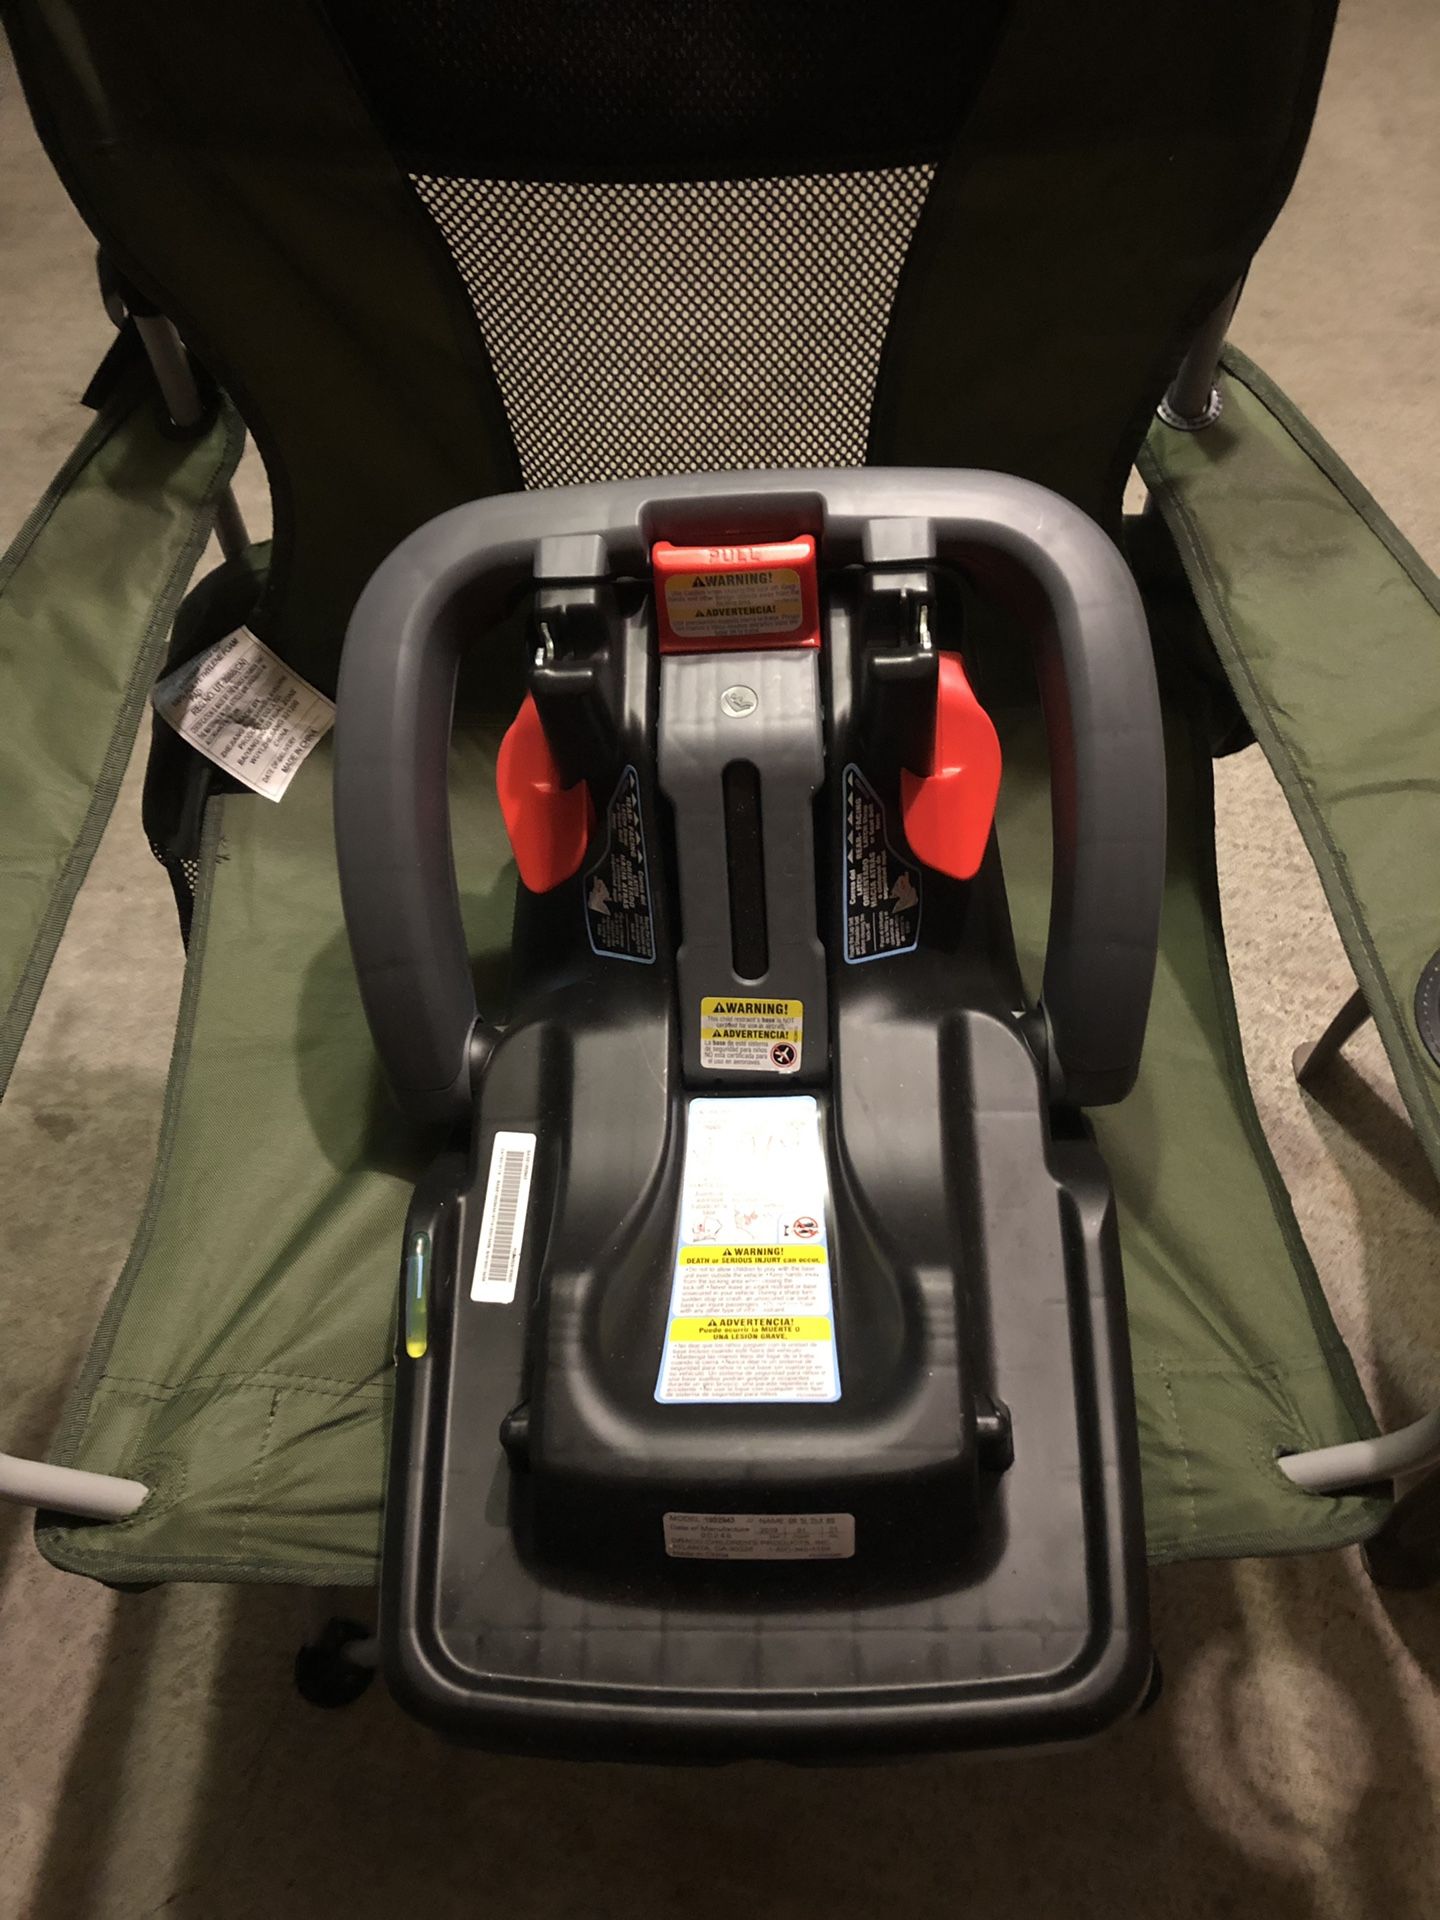 SnugRide DLX car seat base